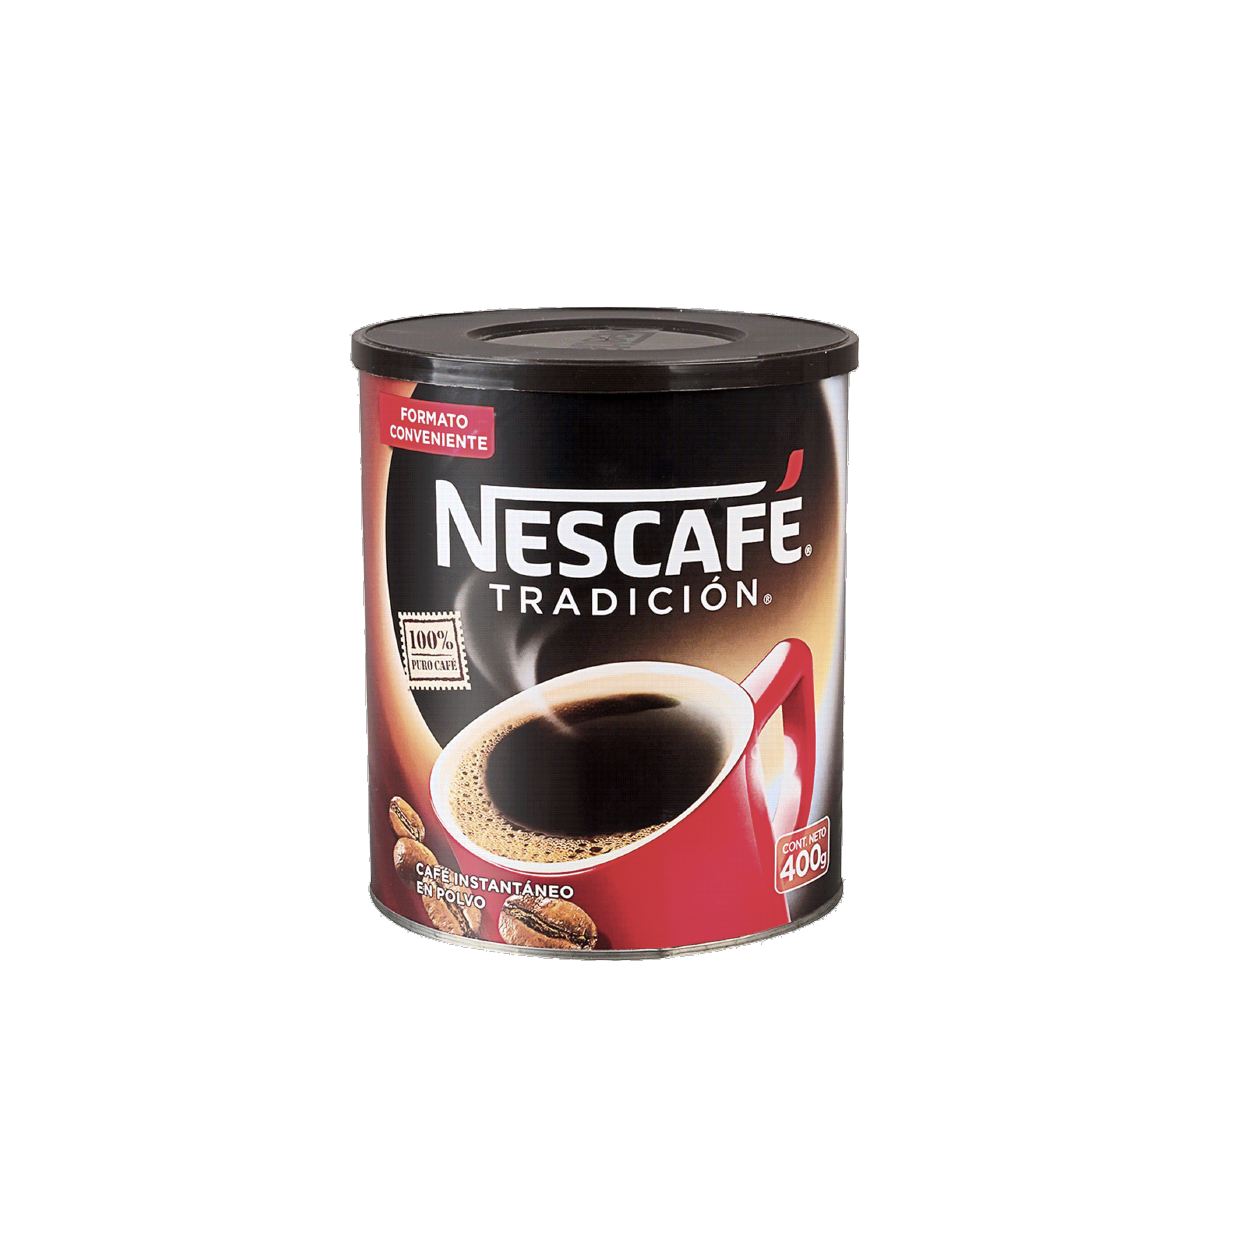 Nescafe tradicion 400 grs